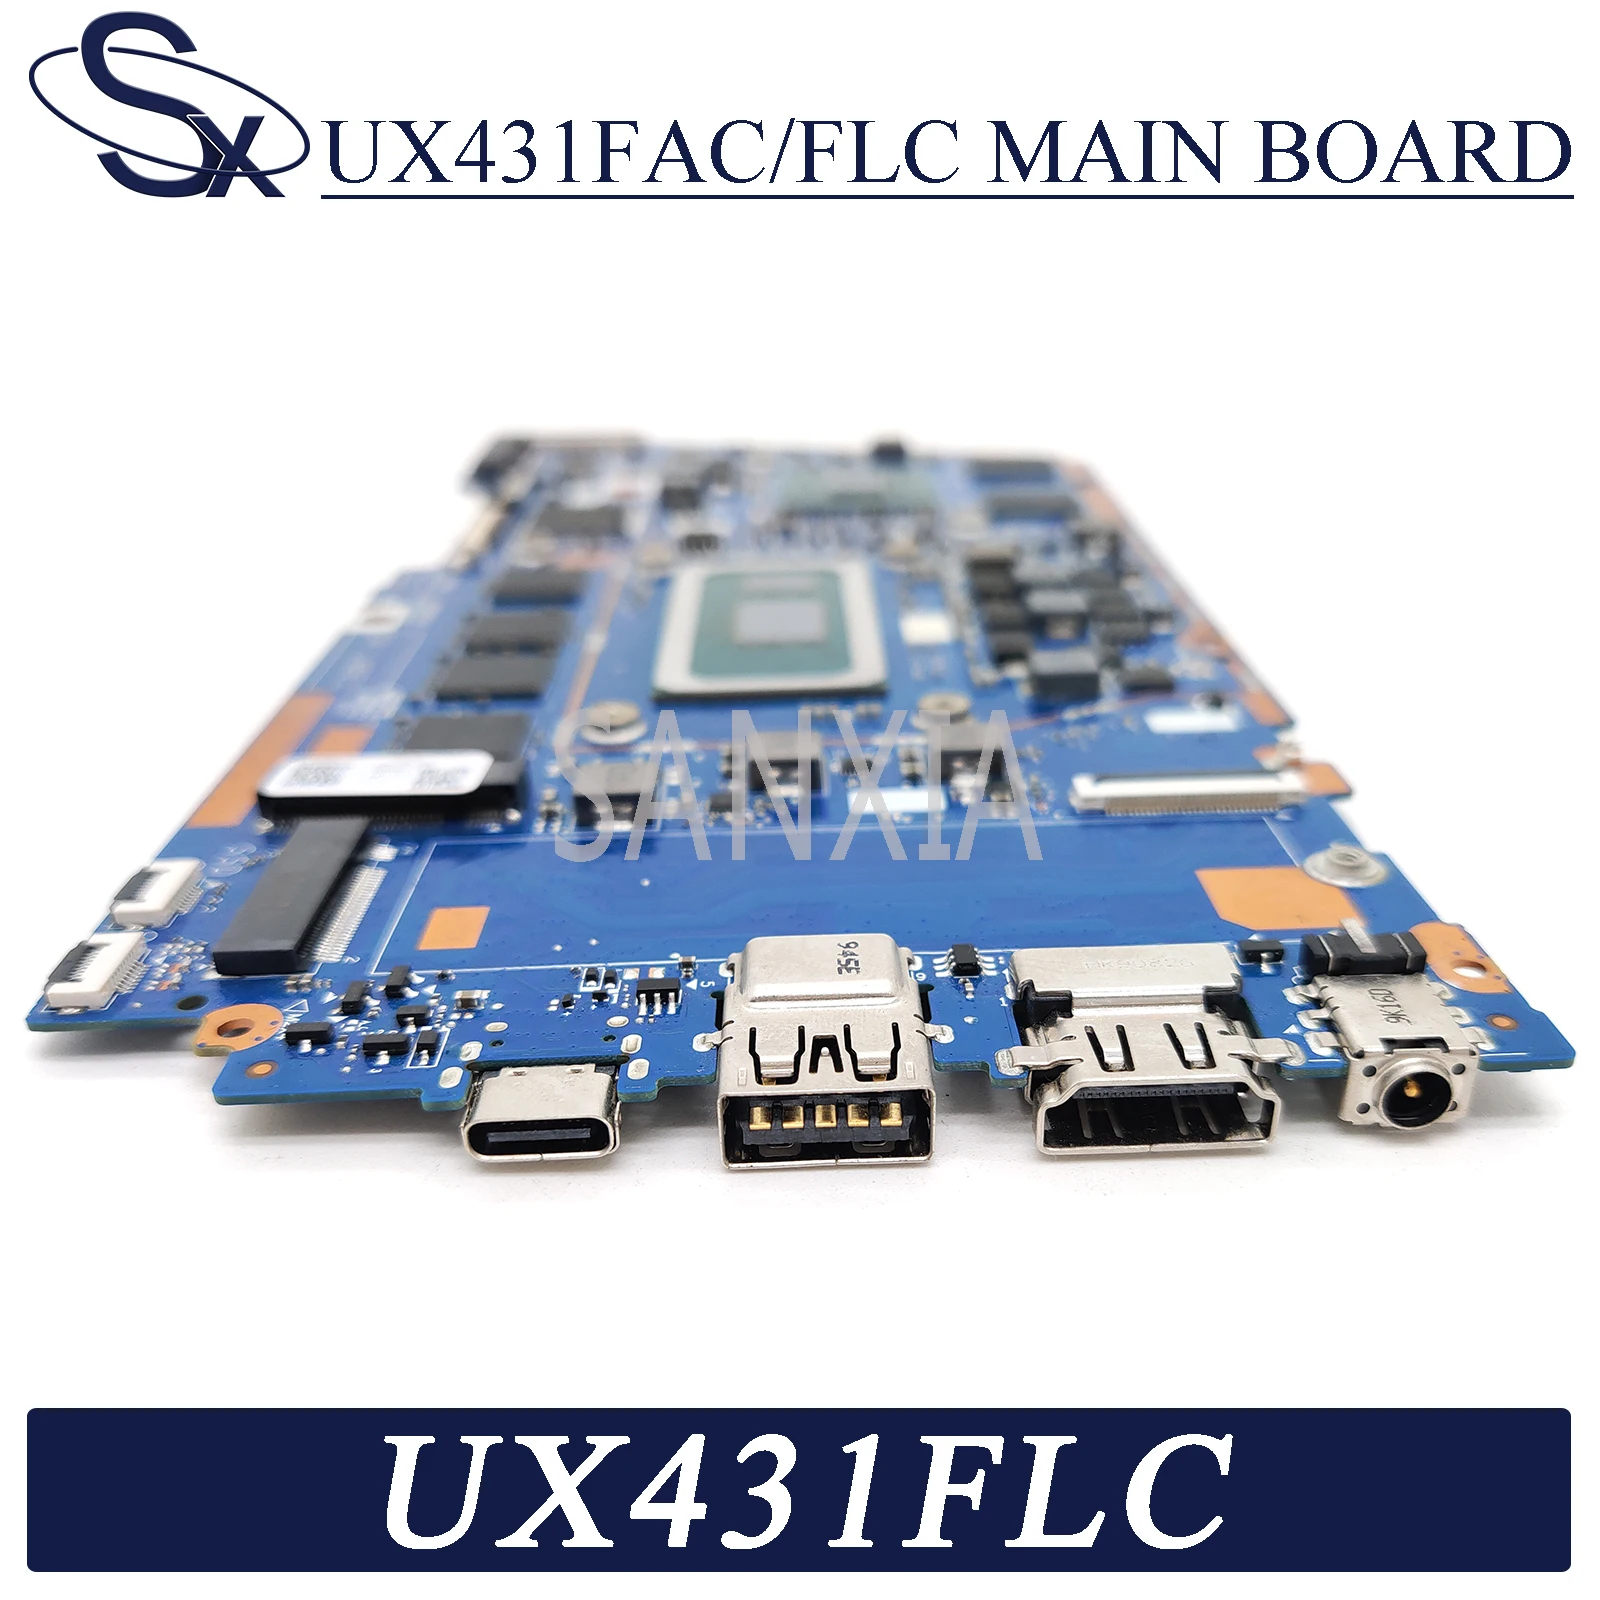 kefu ux431facflc laptop motherboard for asus zenbook ux431flc ux431fn ux431f original mainboard 8gb ram i5 10210u mx150 4gb free global shipping